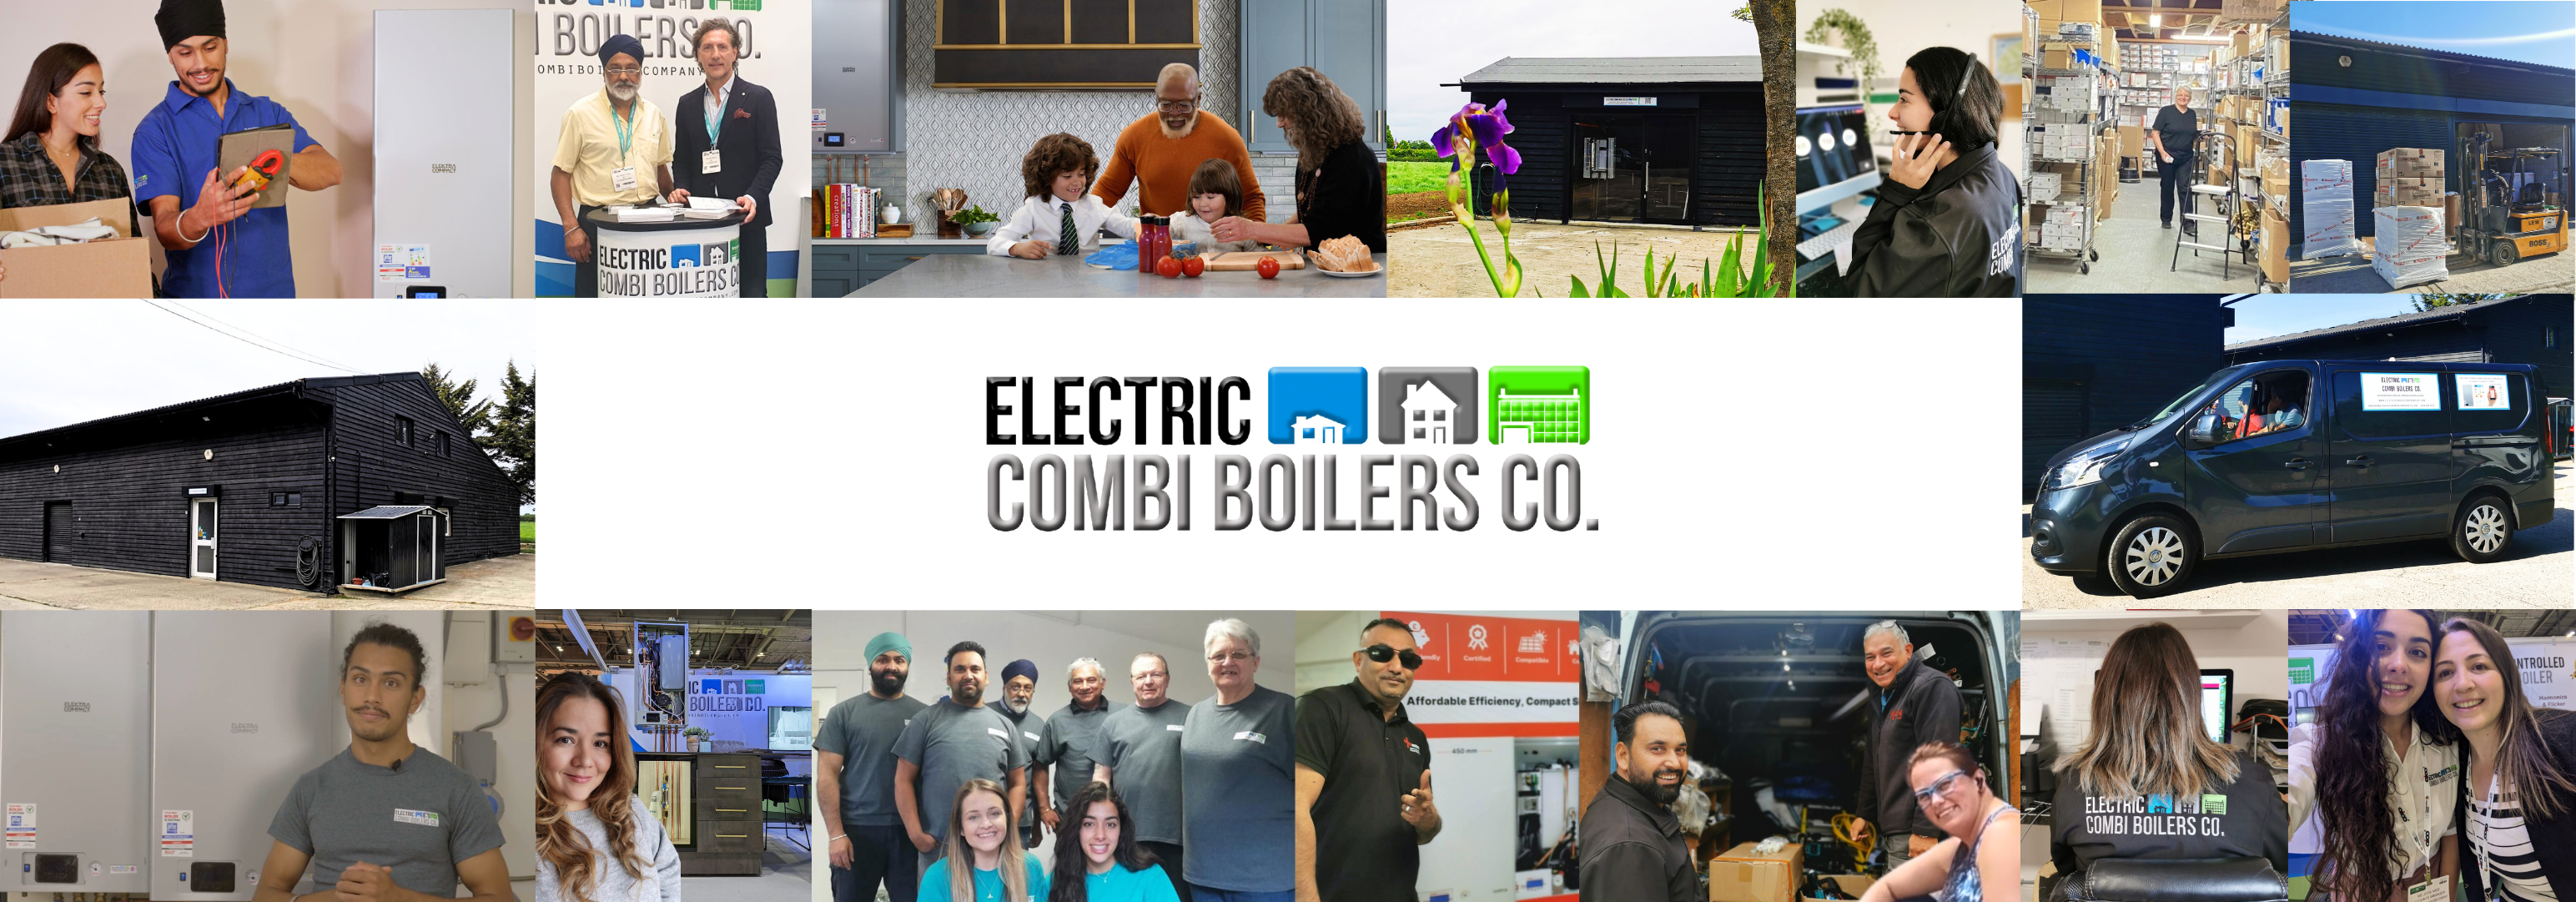 Electric Combi Boilers Team Banner